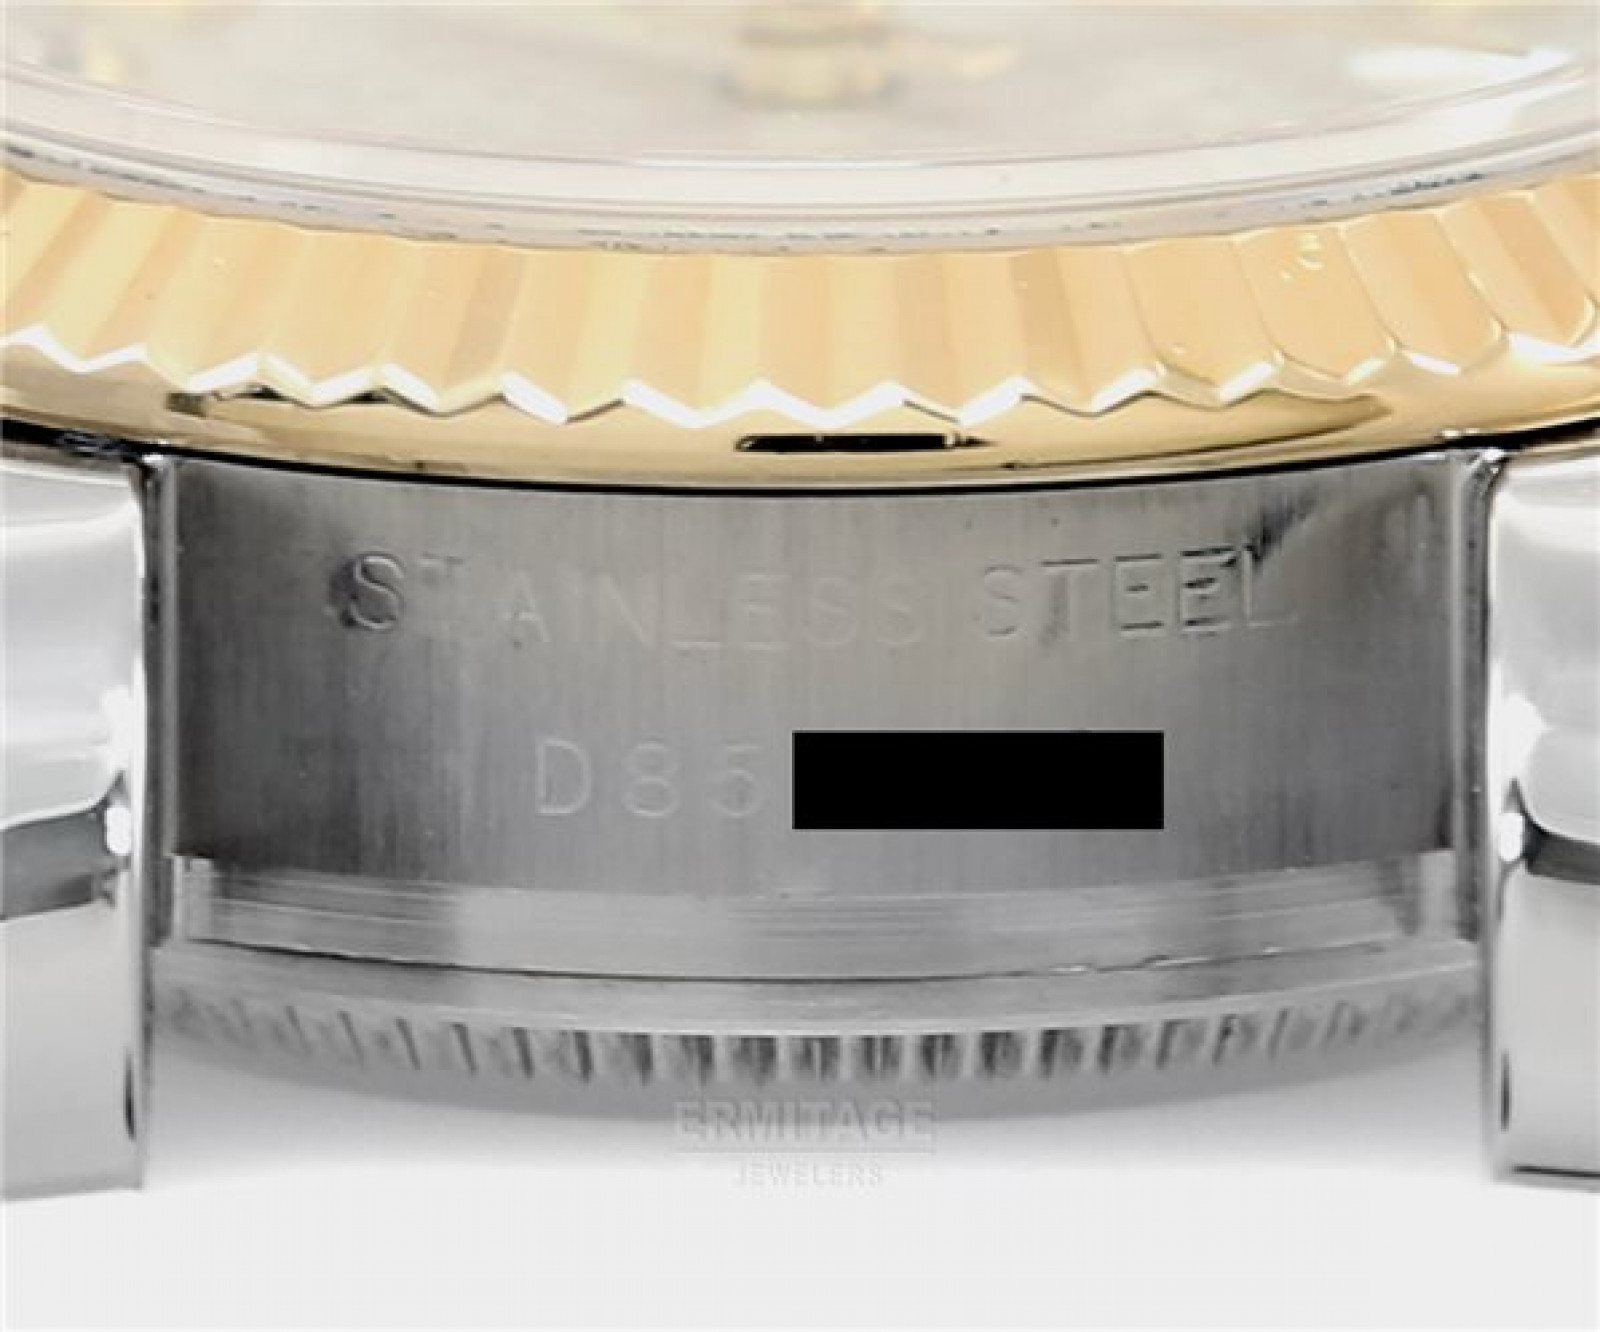 Diamond Dial Rolex Datejust 179163 Gold & Steel